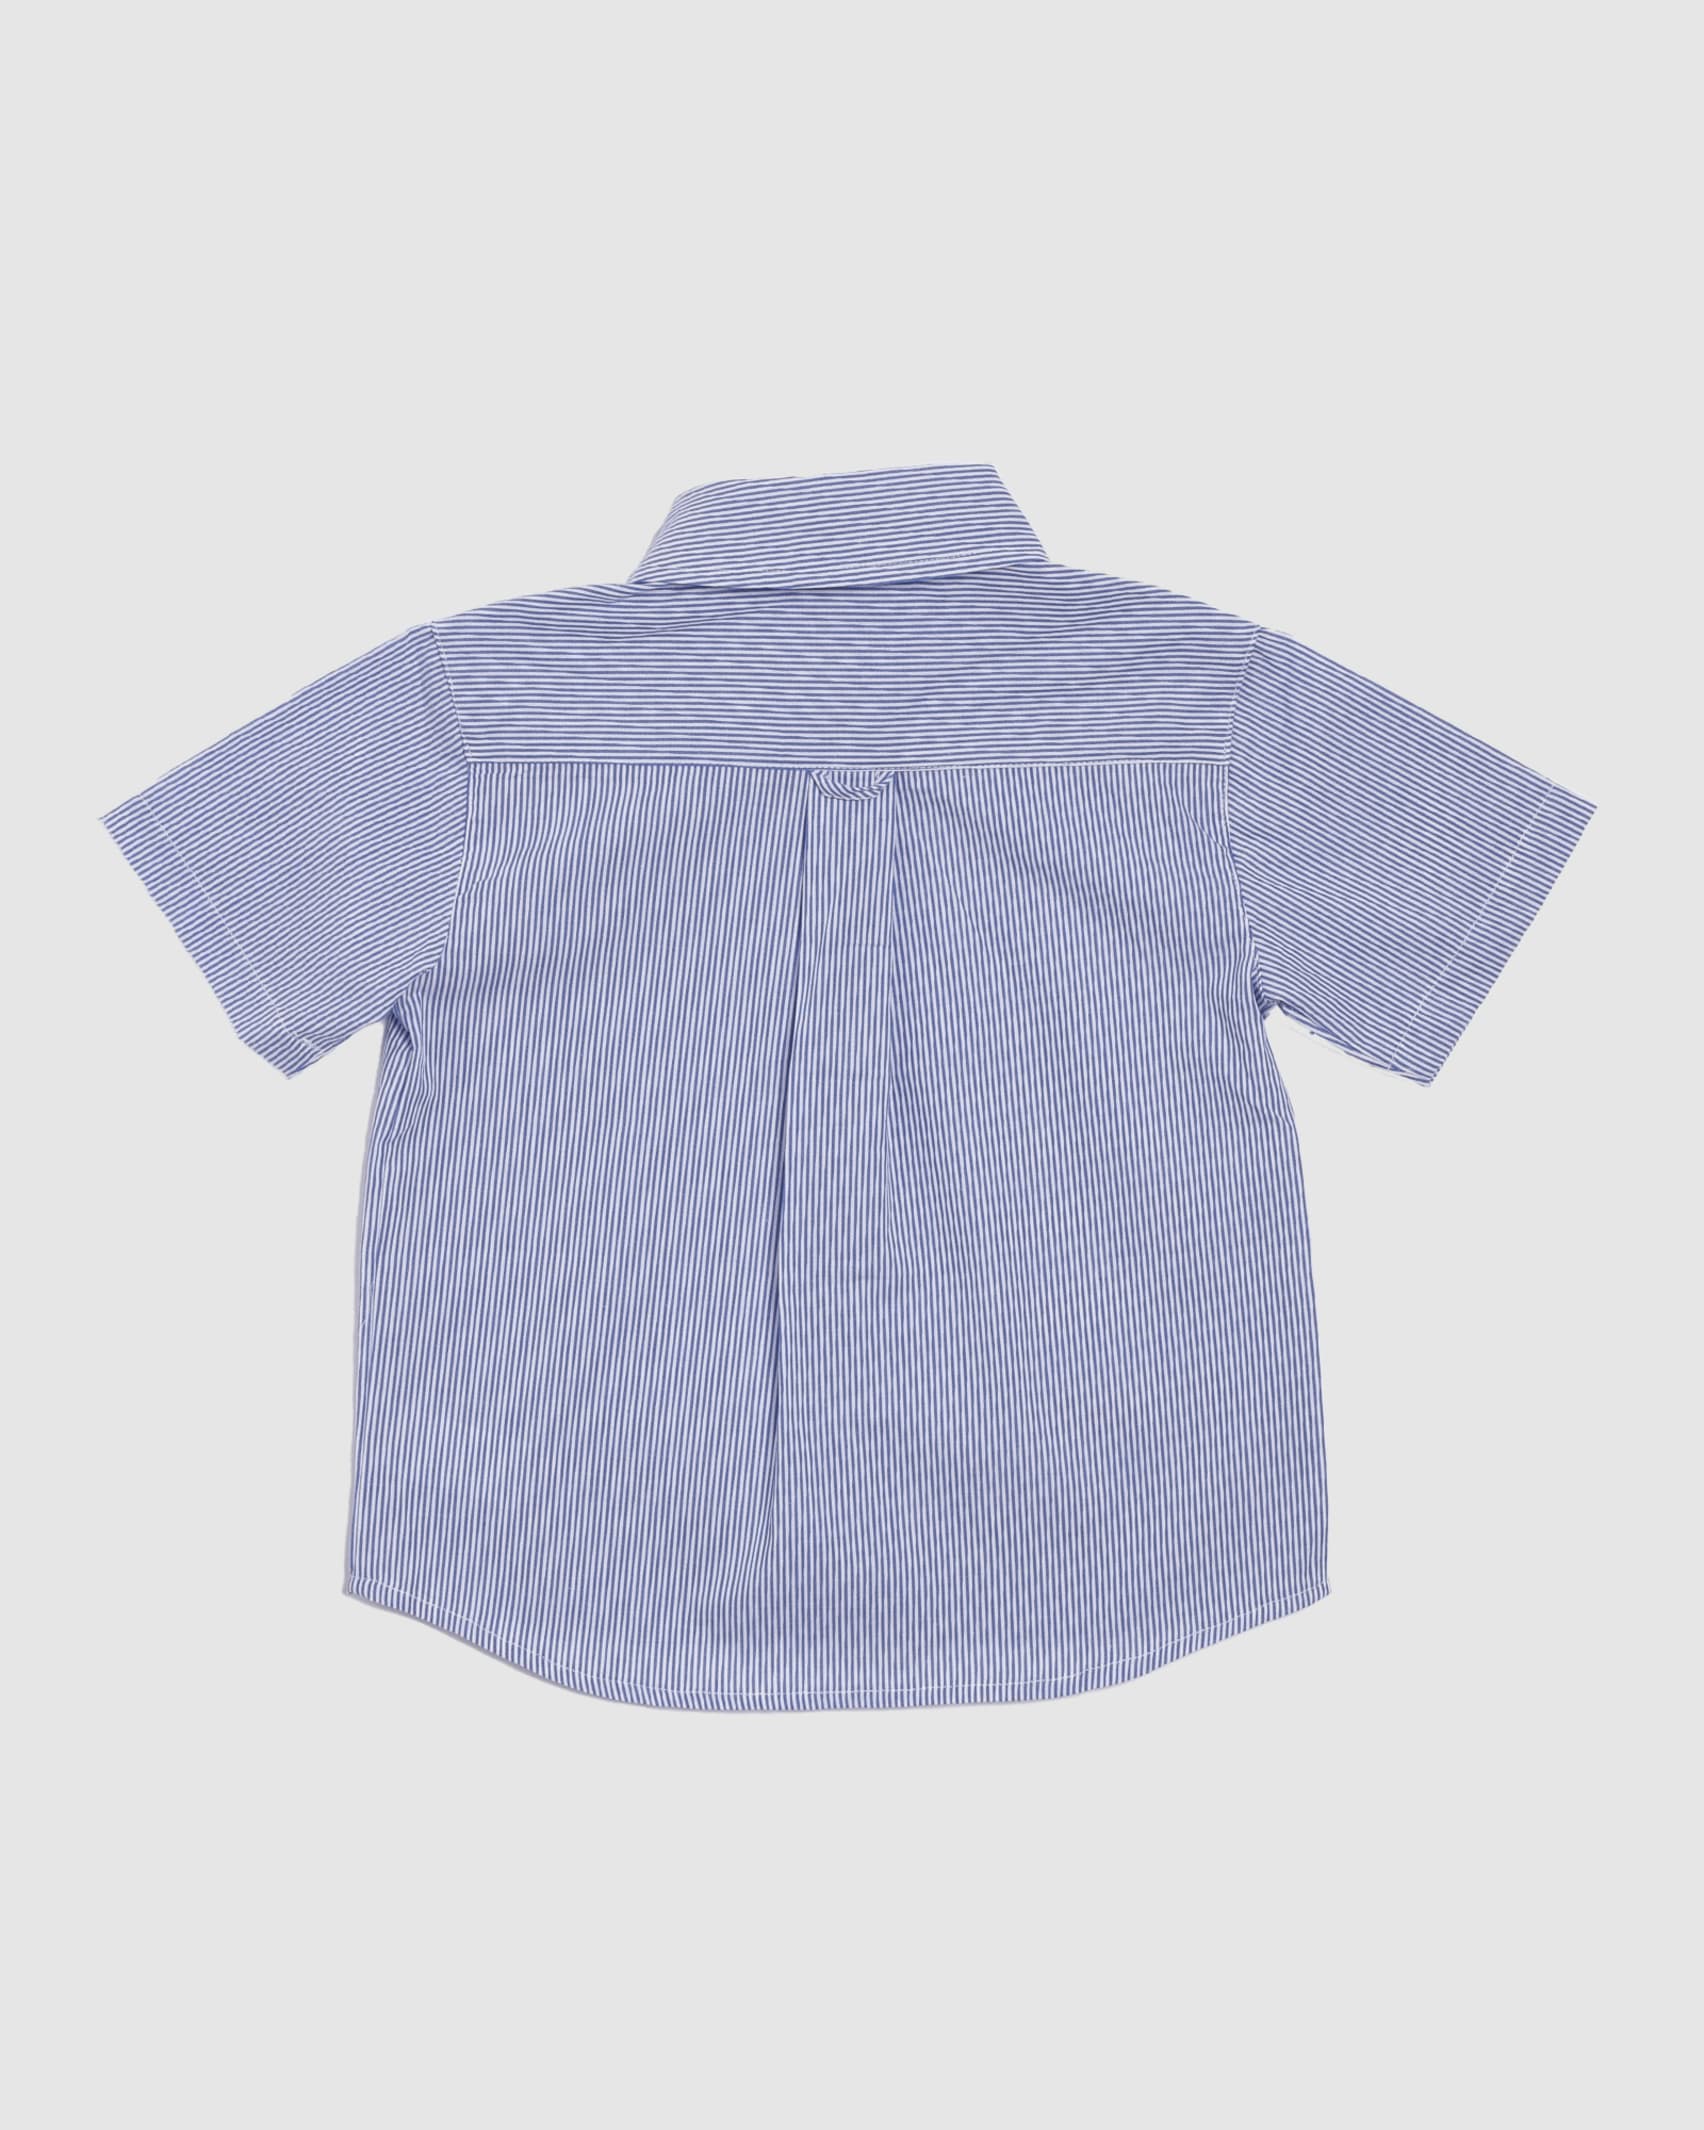 Fred Cotton Stripe Short Sleeve Shirt in BLUE MULTI